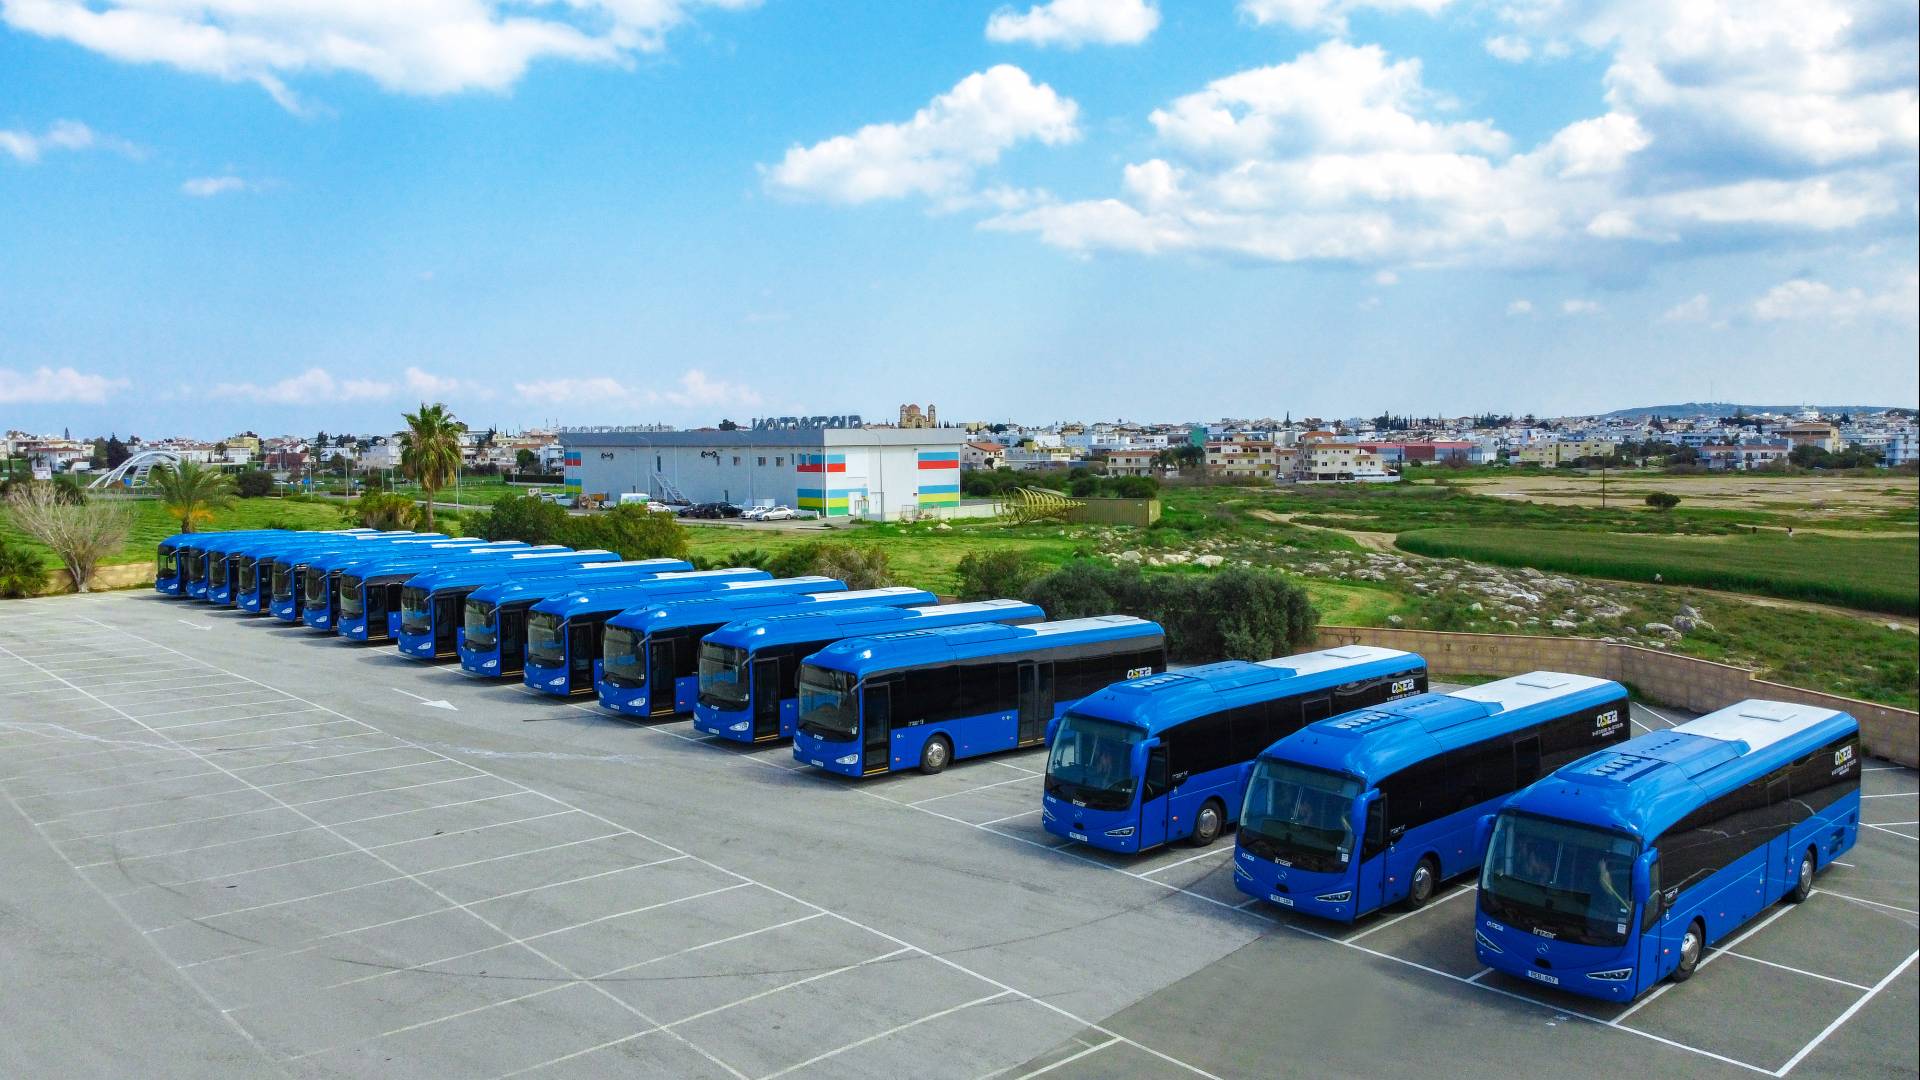 Irizar coaches conquer public transport in Cyprus